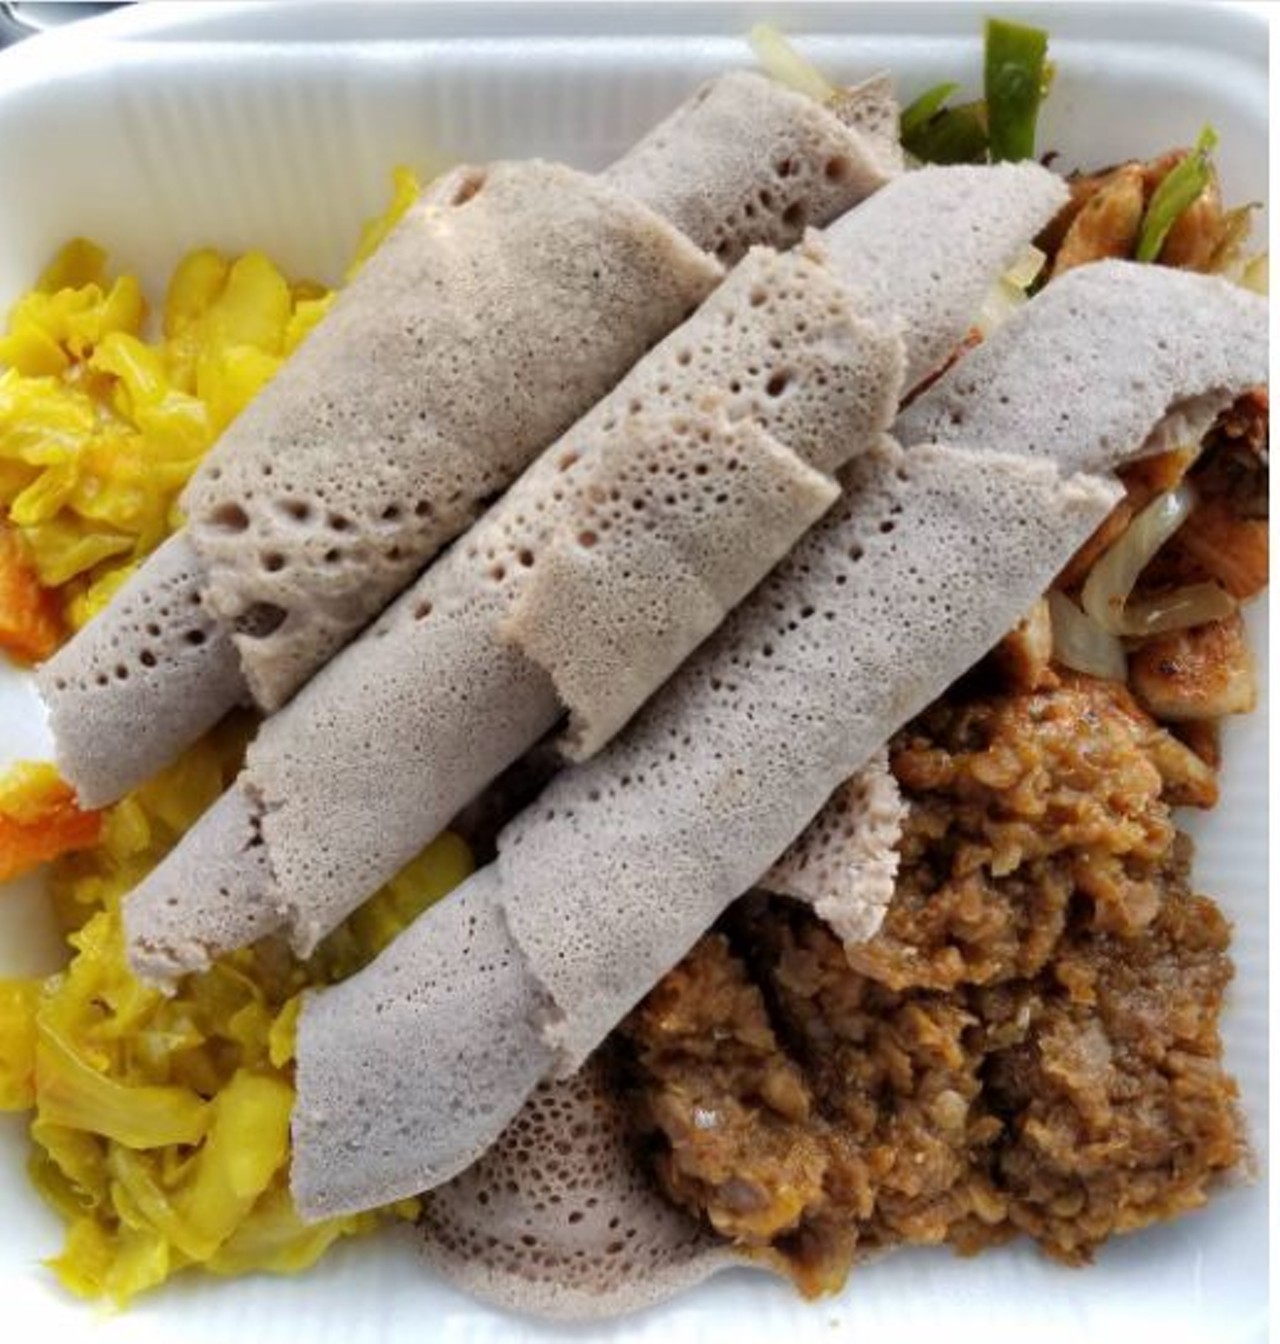 Berbere Ethiopian Cuisine
(210) 310-9264, 
berbereethiopian.com
Savor the flavors at this Ethiopian eatery &#151; you won't be disappointed. 
Photo via Instagram 
itstariq 
